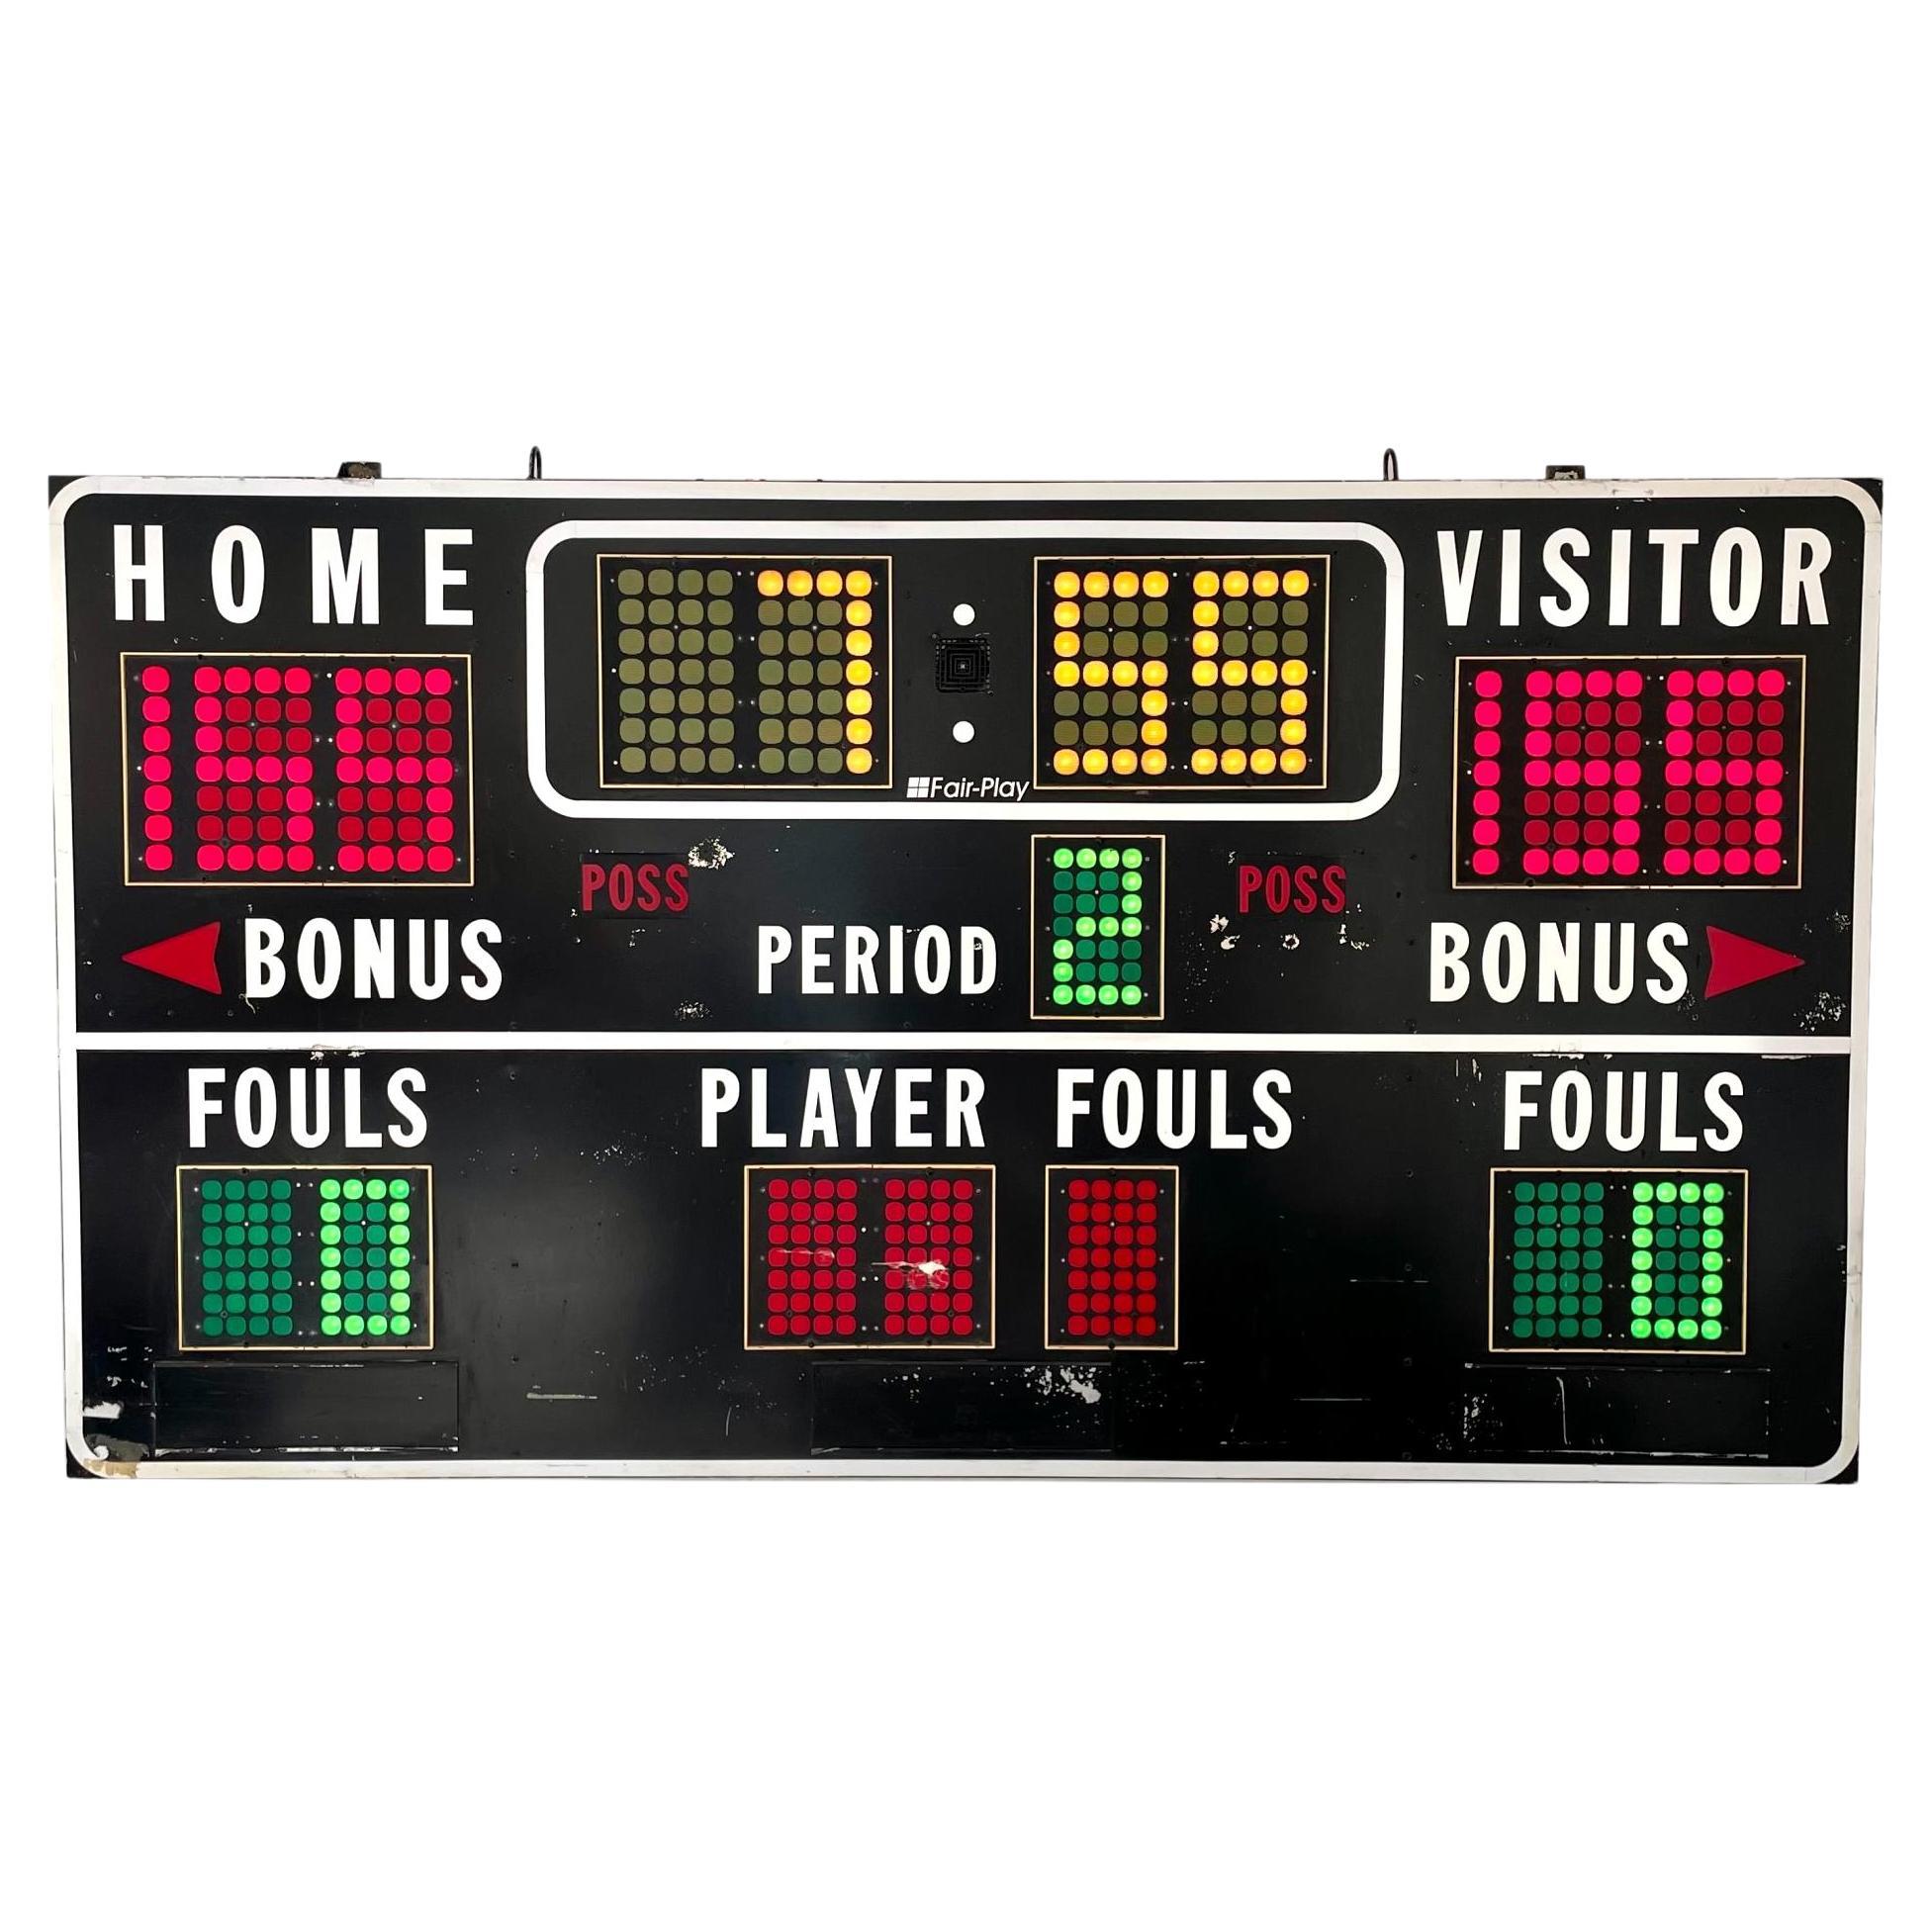 Massive 1970s Basketball Scoreboard